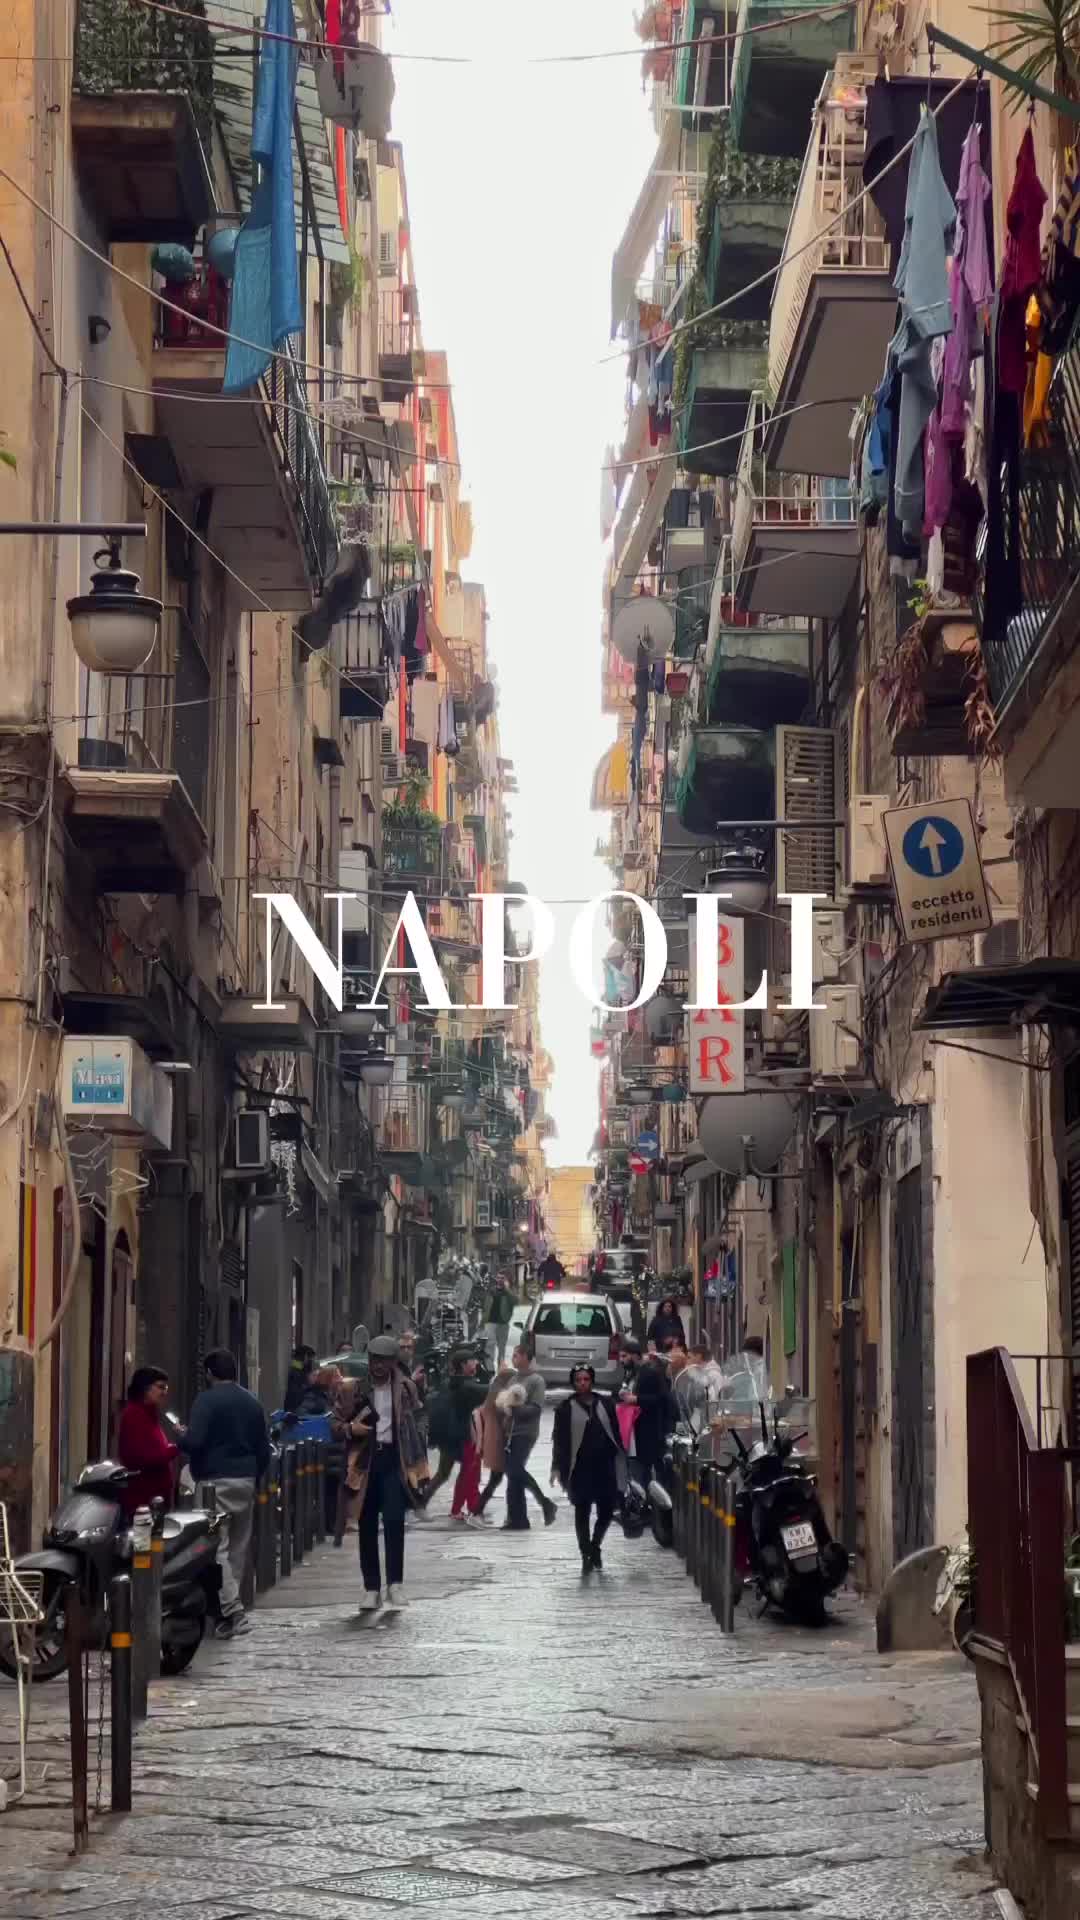 Tag someone you’d love to visit Naples with 🩵🇮🇹 
•
•
•
•
#italianplaces #thatsdarling #italy #map_of_europe #italiainunoscatto #theprettycities #trevifountain #culturetrip #cntraveler #travellingthroughtheworld #italy_vacations #naples #italylovers #passionpassport #napli #italiainfoto #napolidavivere #naplesitaly #tlpicks #beautifuldestinations #passionpassport #italytravel #napolinstagram #theweekoninstagram #iamatraveler #italia #campania